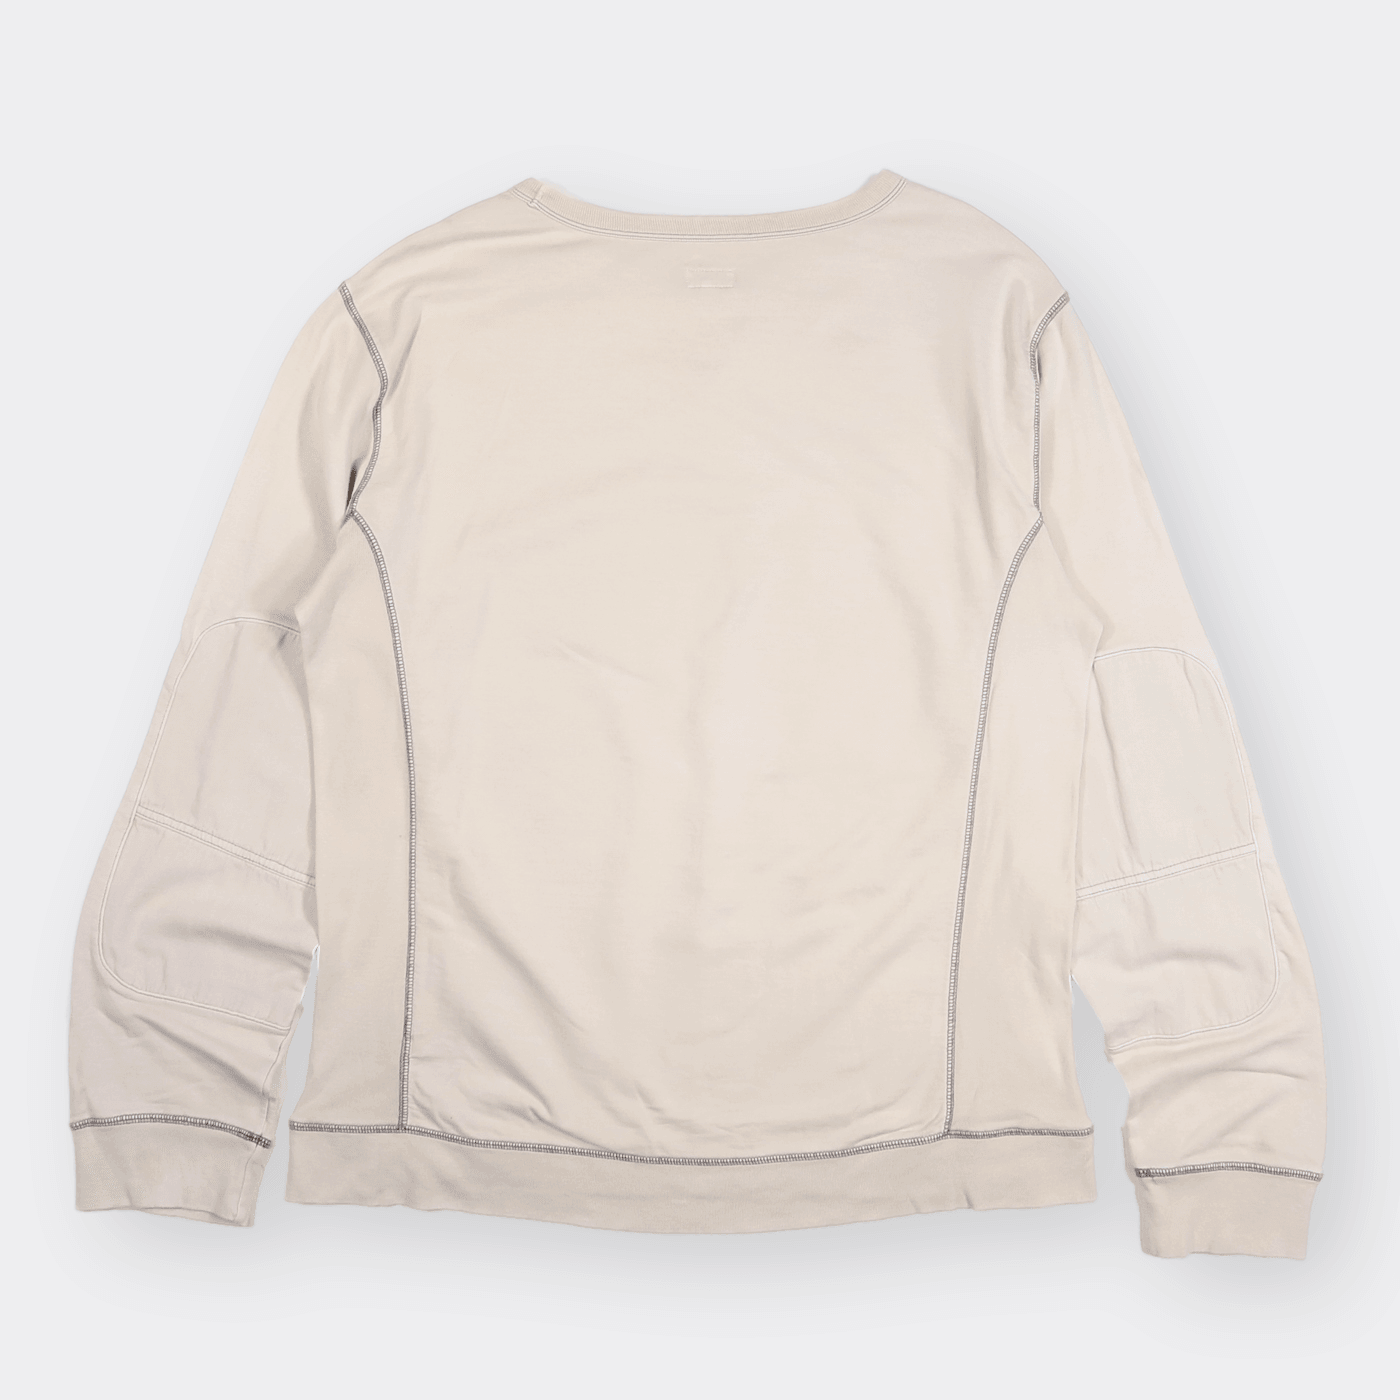 Armani Vintage Sweatshirt - Large - Known Source